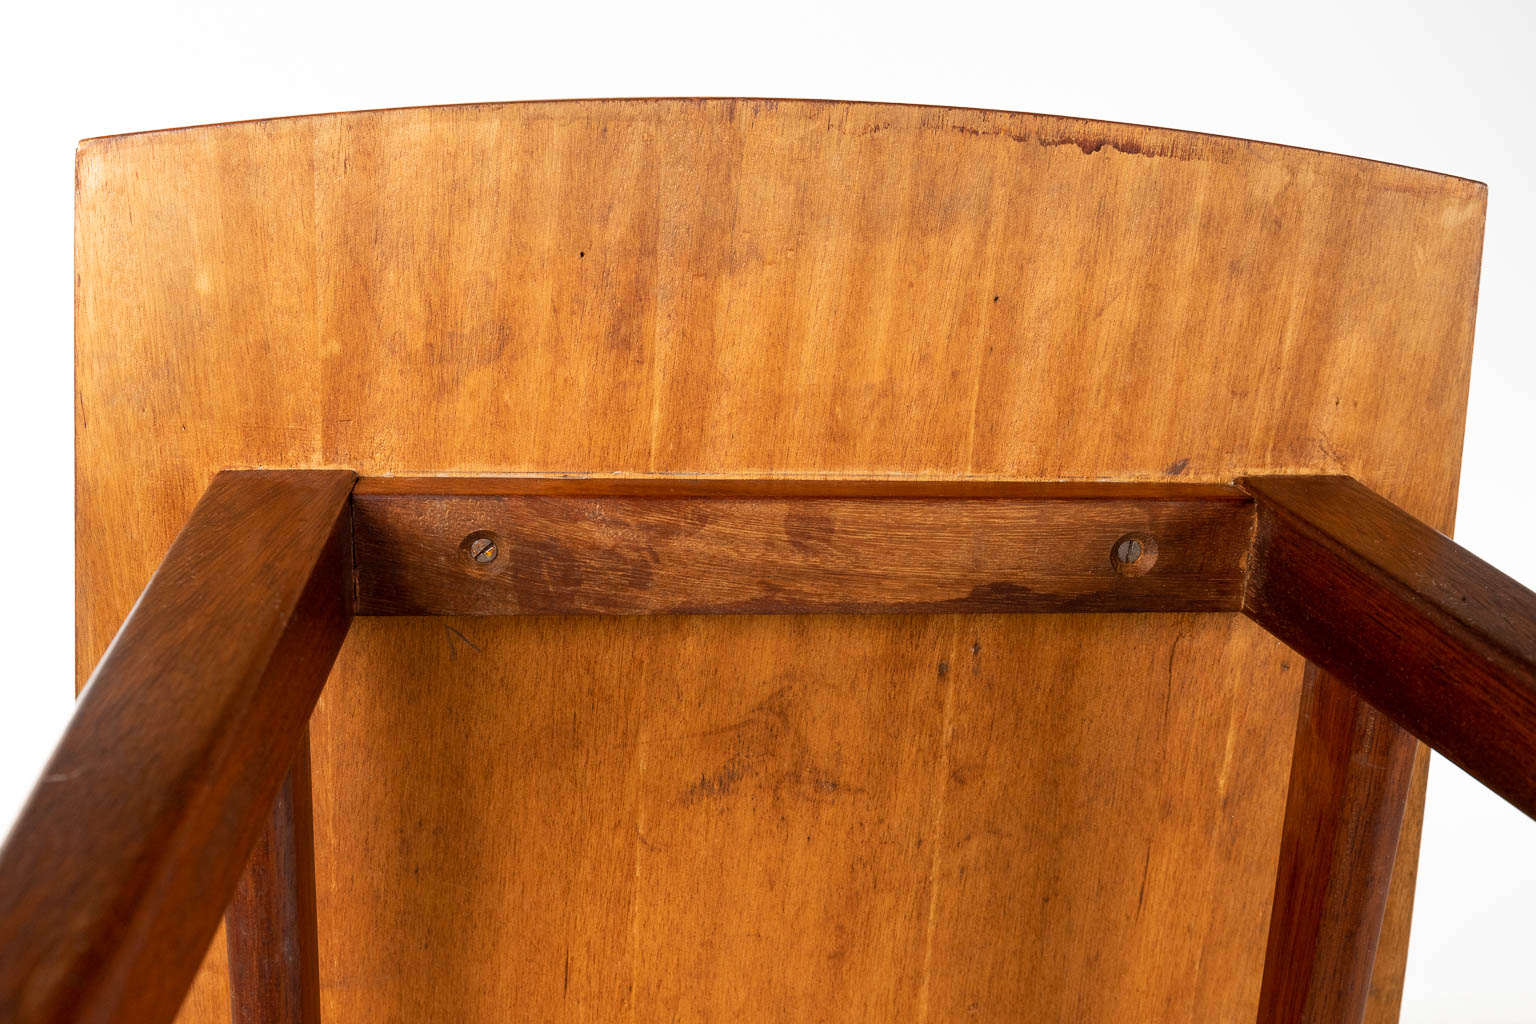 A mid-century Scandinavian coffee table, probably solid teak. (D:50 x W:120 x H:45 cm)